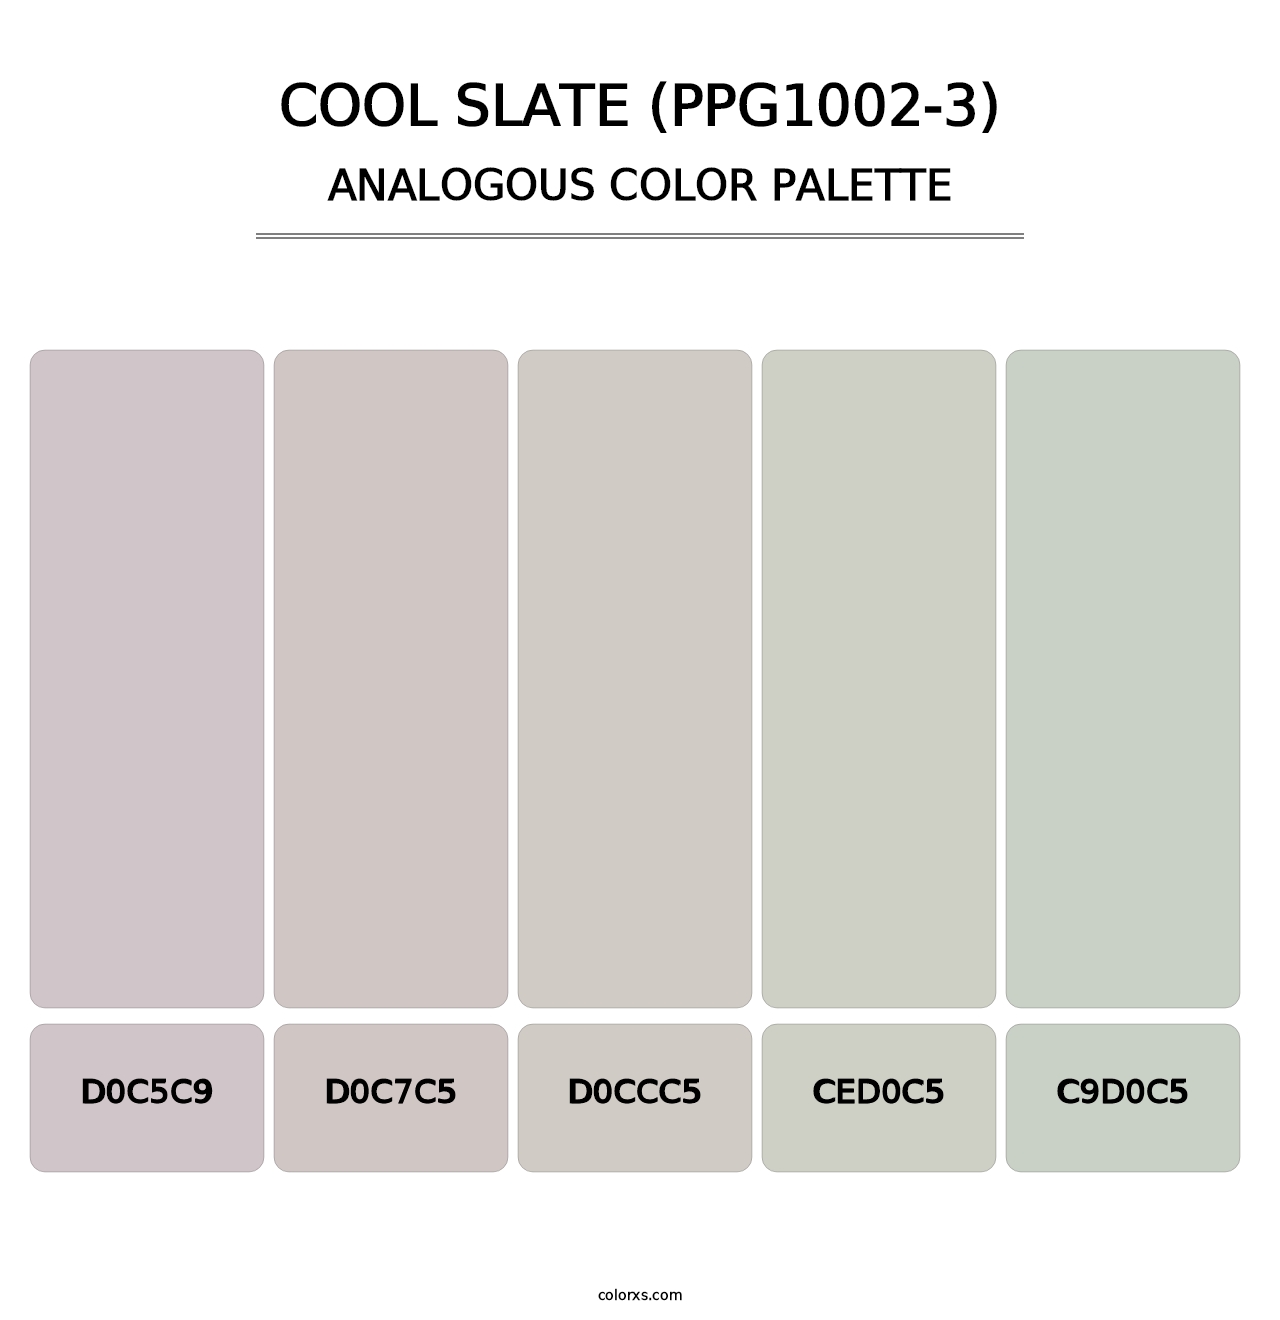 Cool Slate (PPG1002-3) - Analogous Color Palette